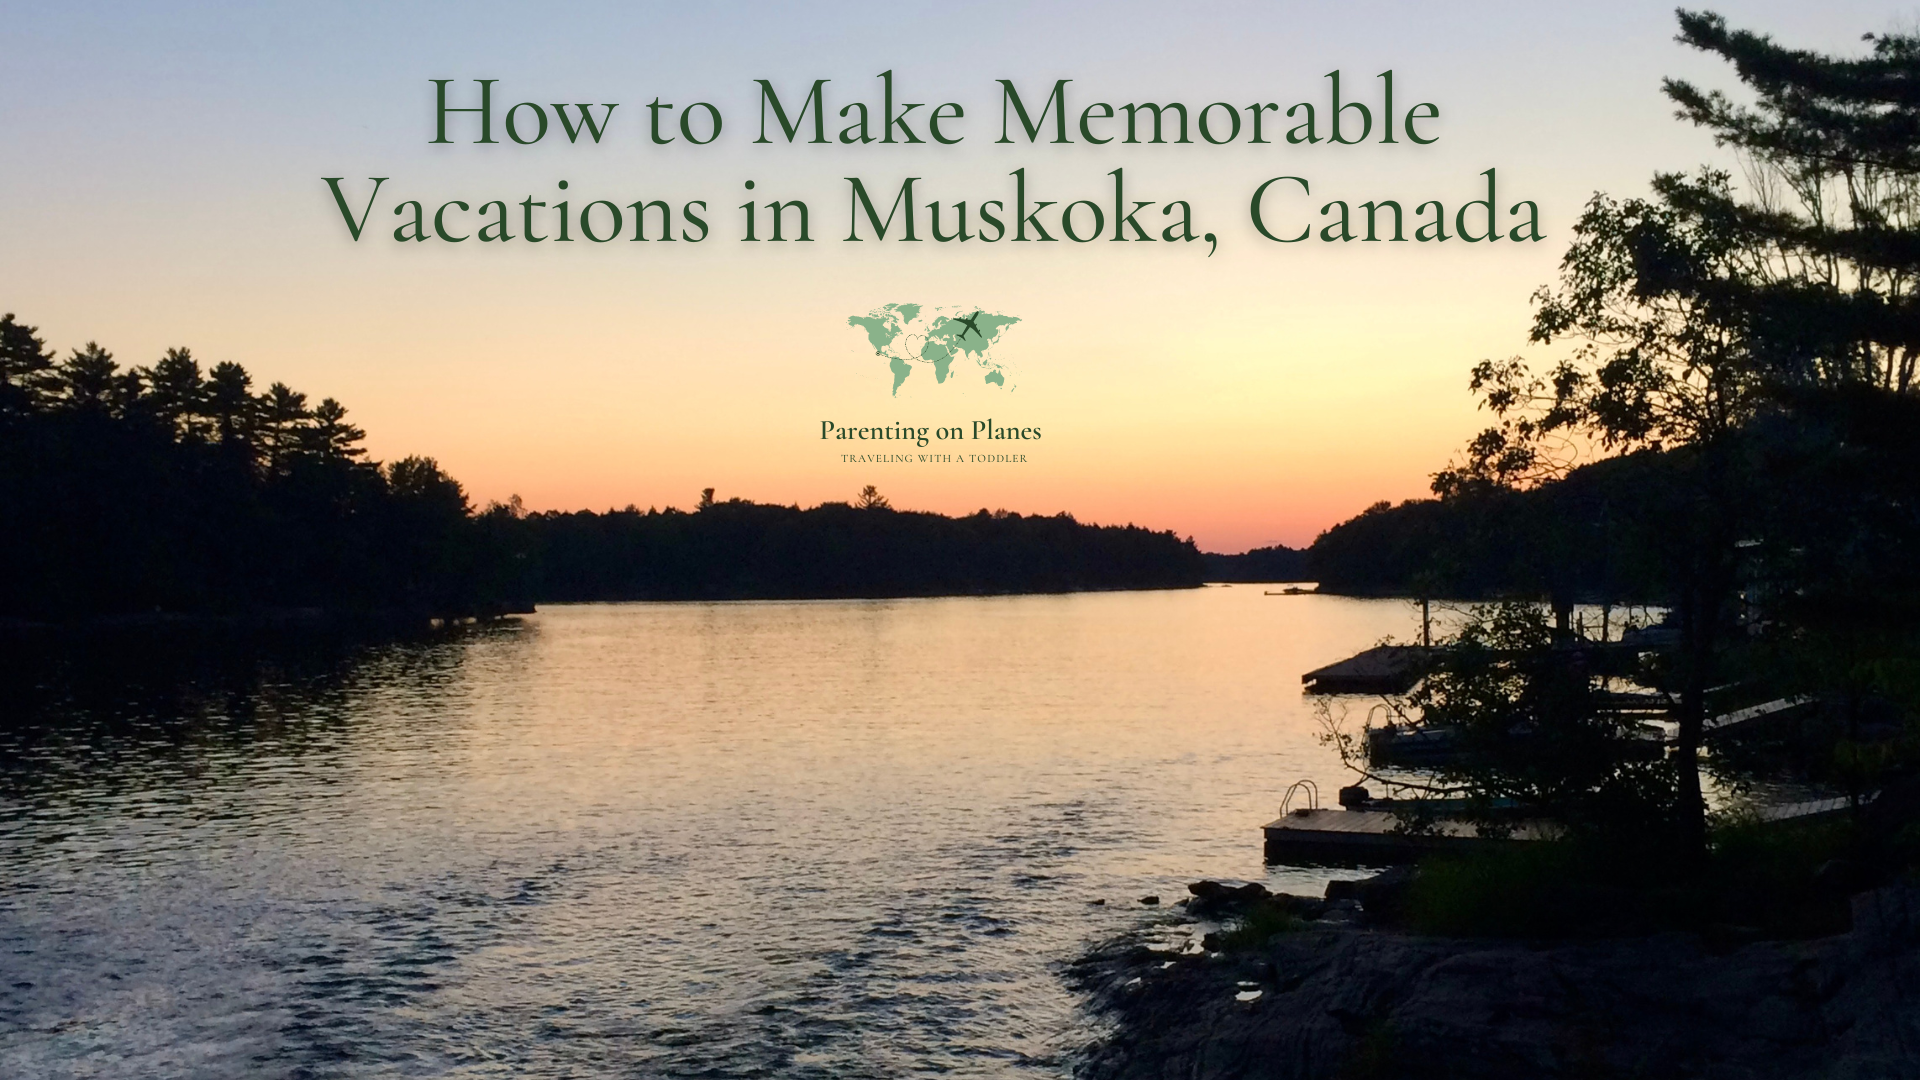 How to Make Memorable Vacations in Muskoka, Canada